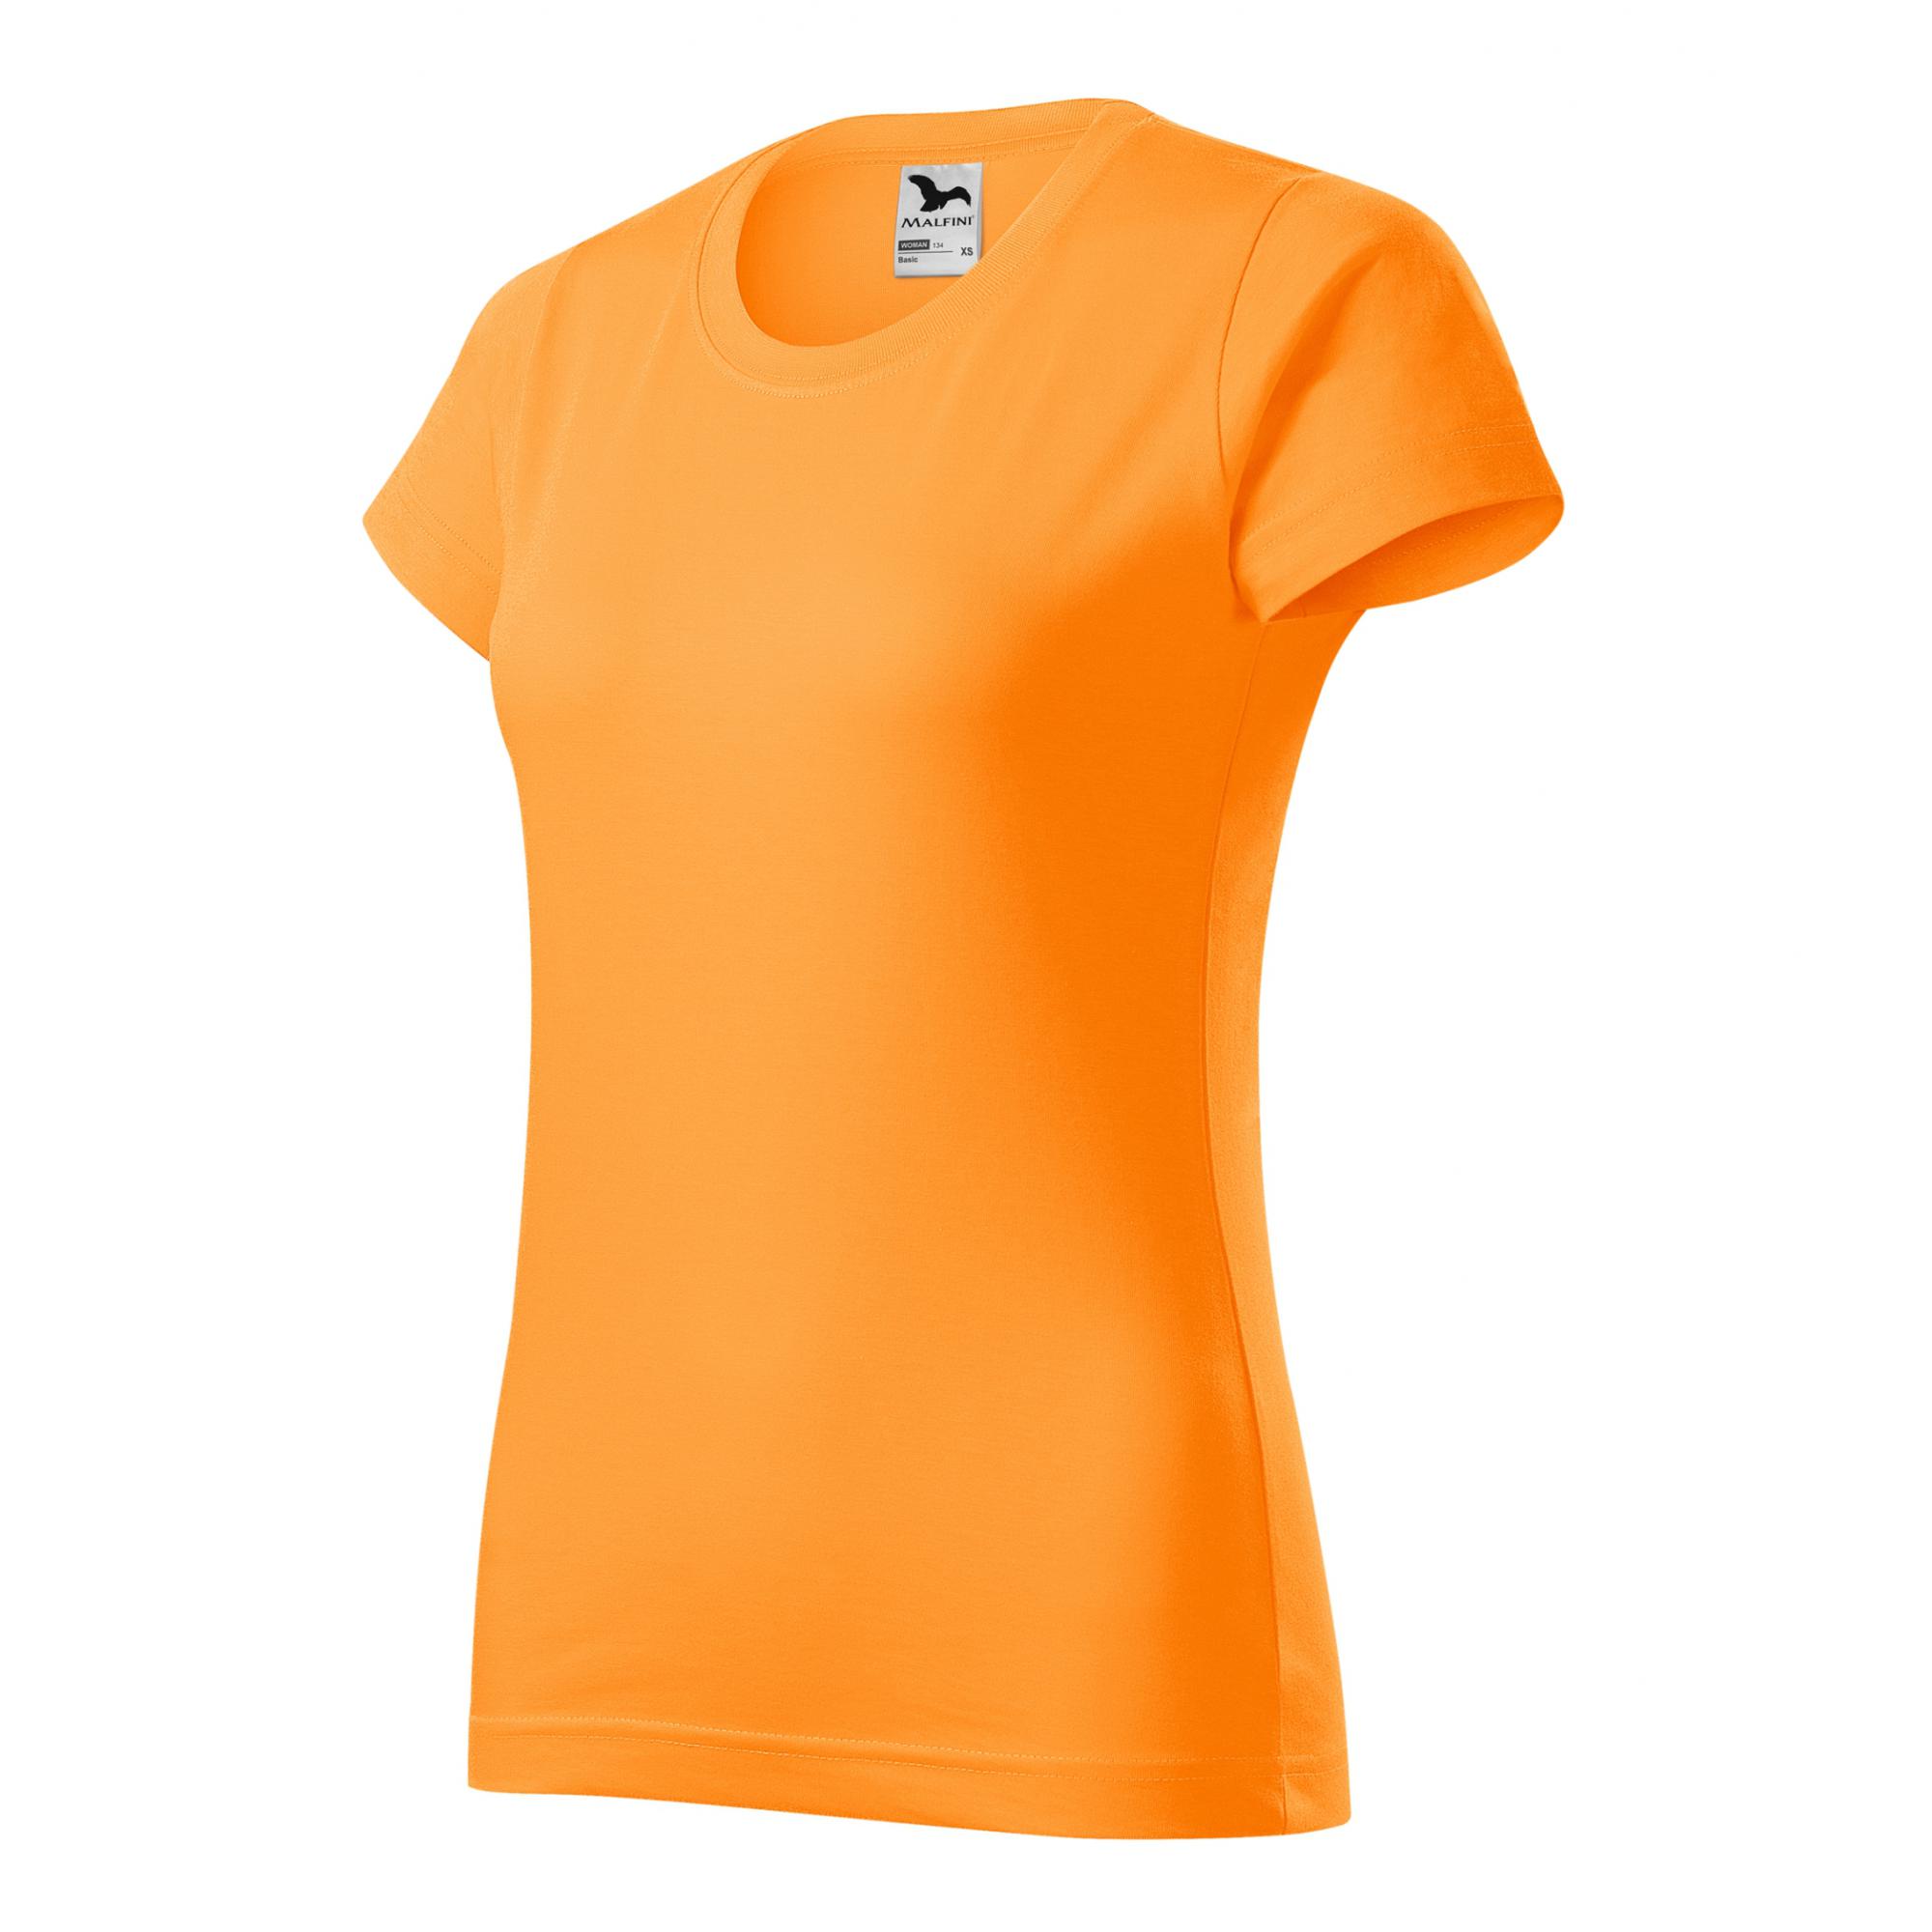 Tricou pentru damă Basic 134 Tangerine orange S